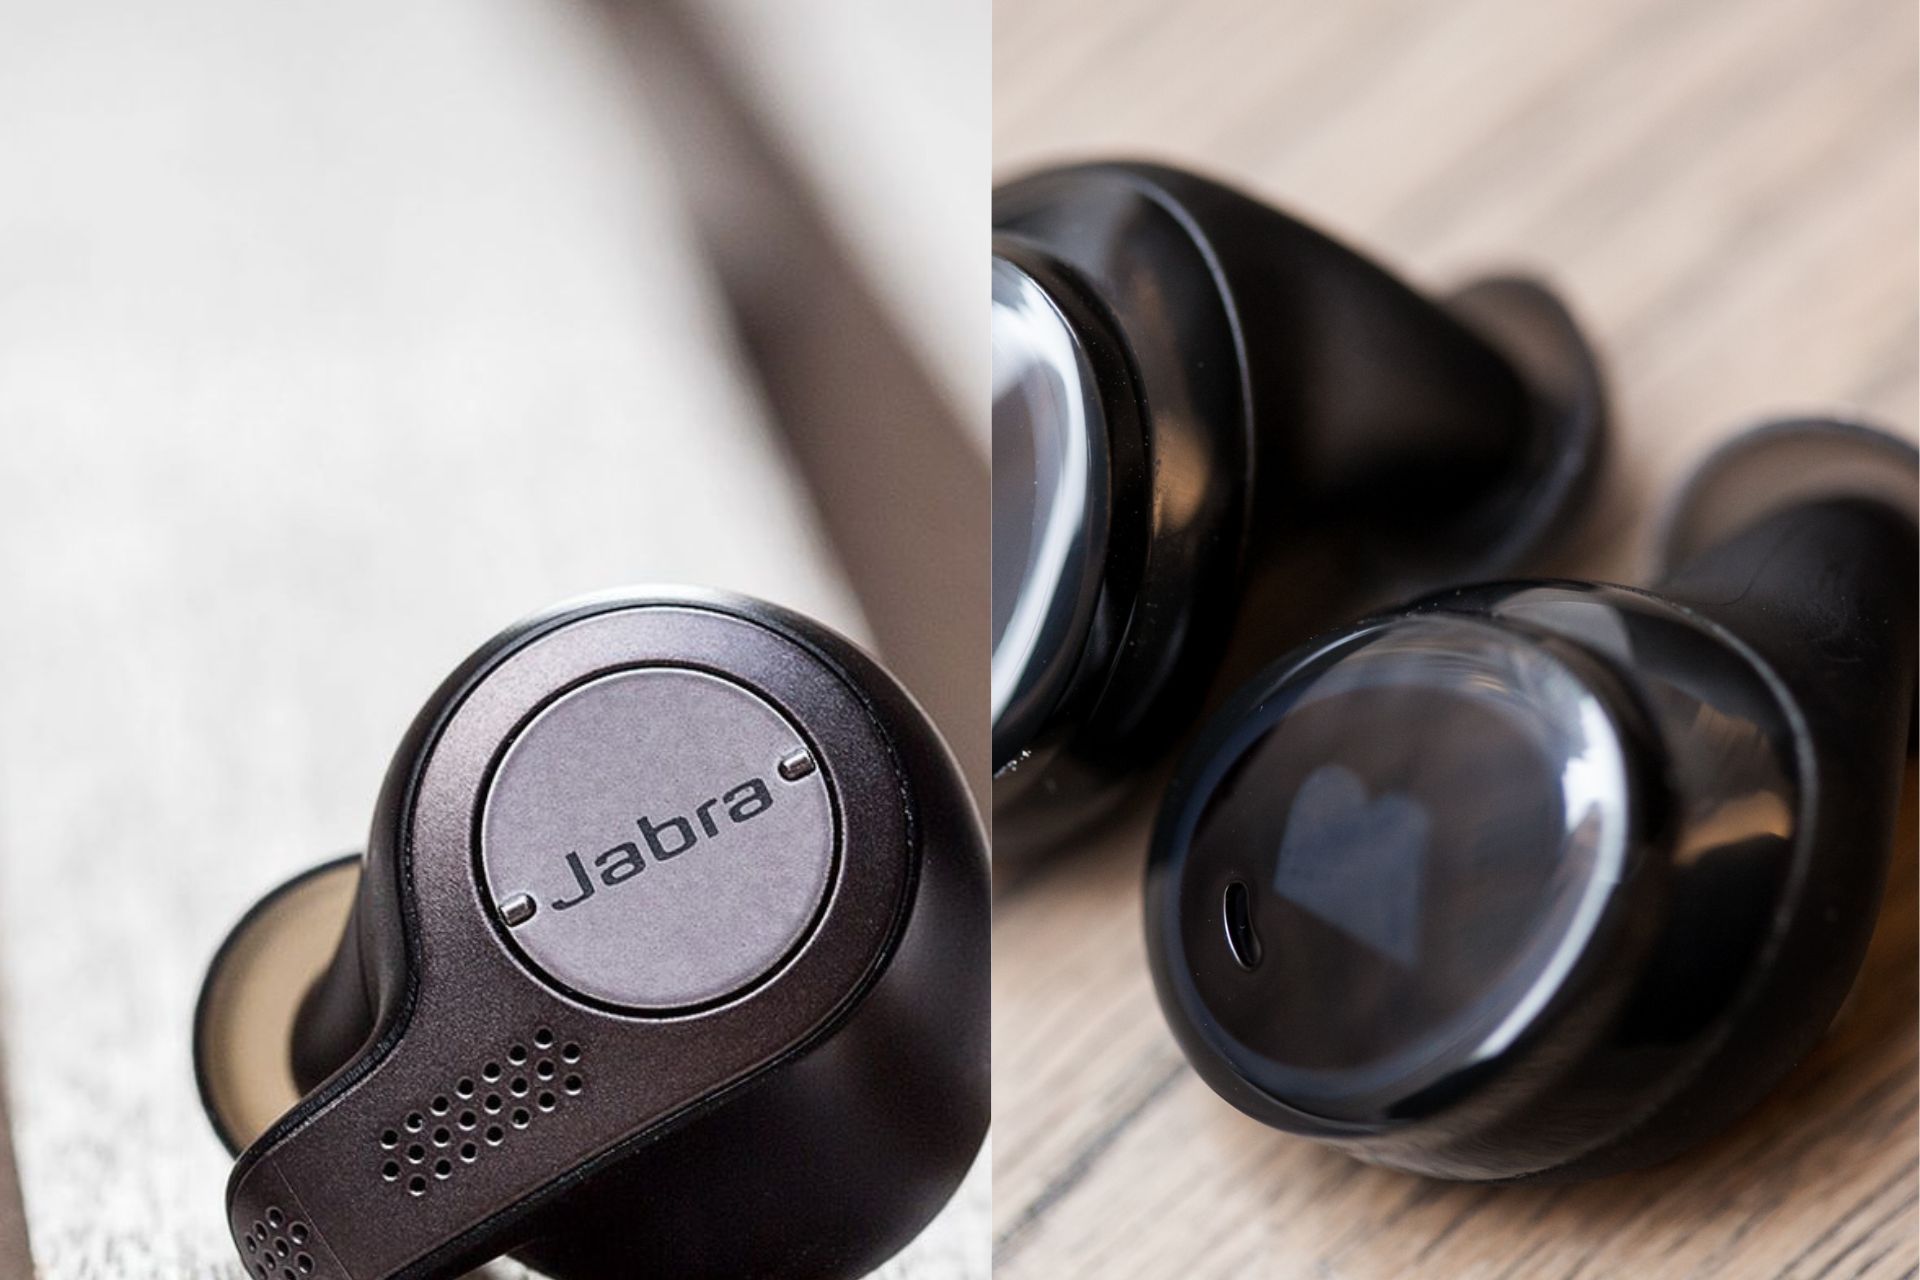 Bragi Vs Jabra - Comparing Two Top Wireless Earbud Brands